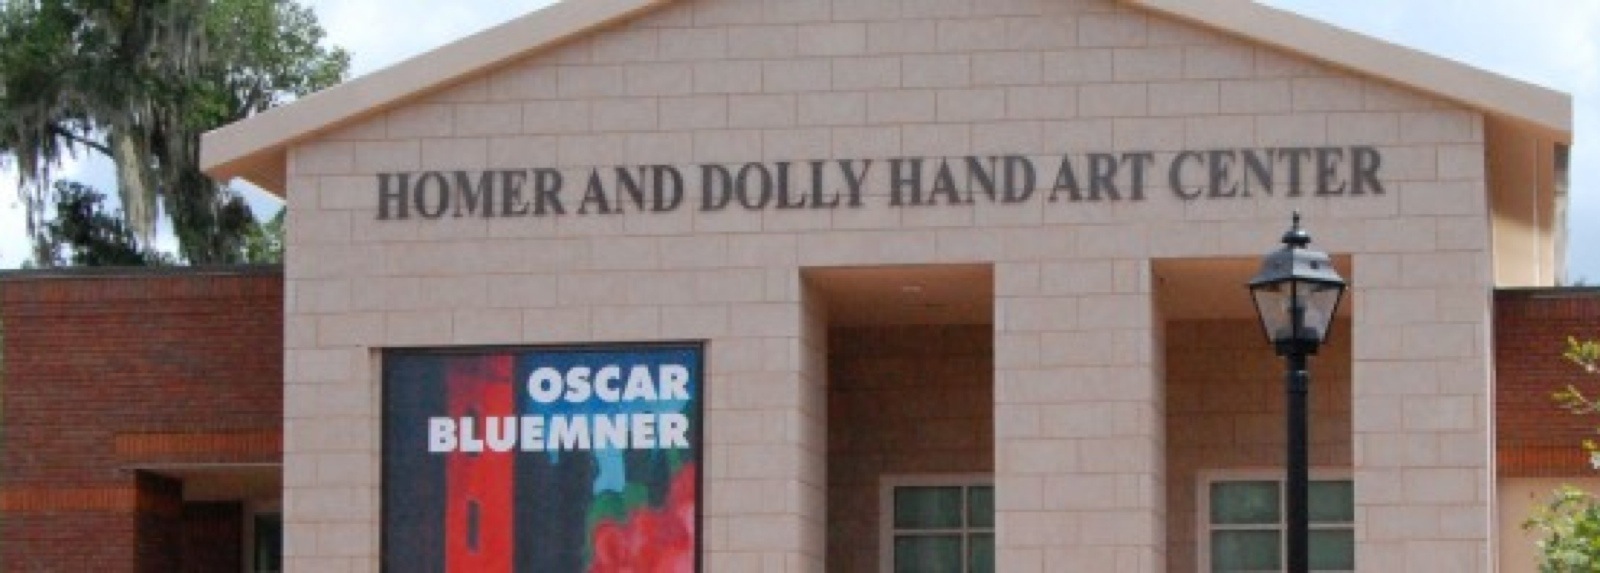 Hand Art Center, hosting exhibition